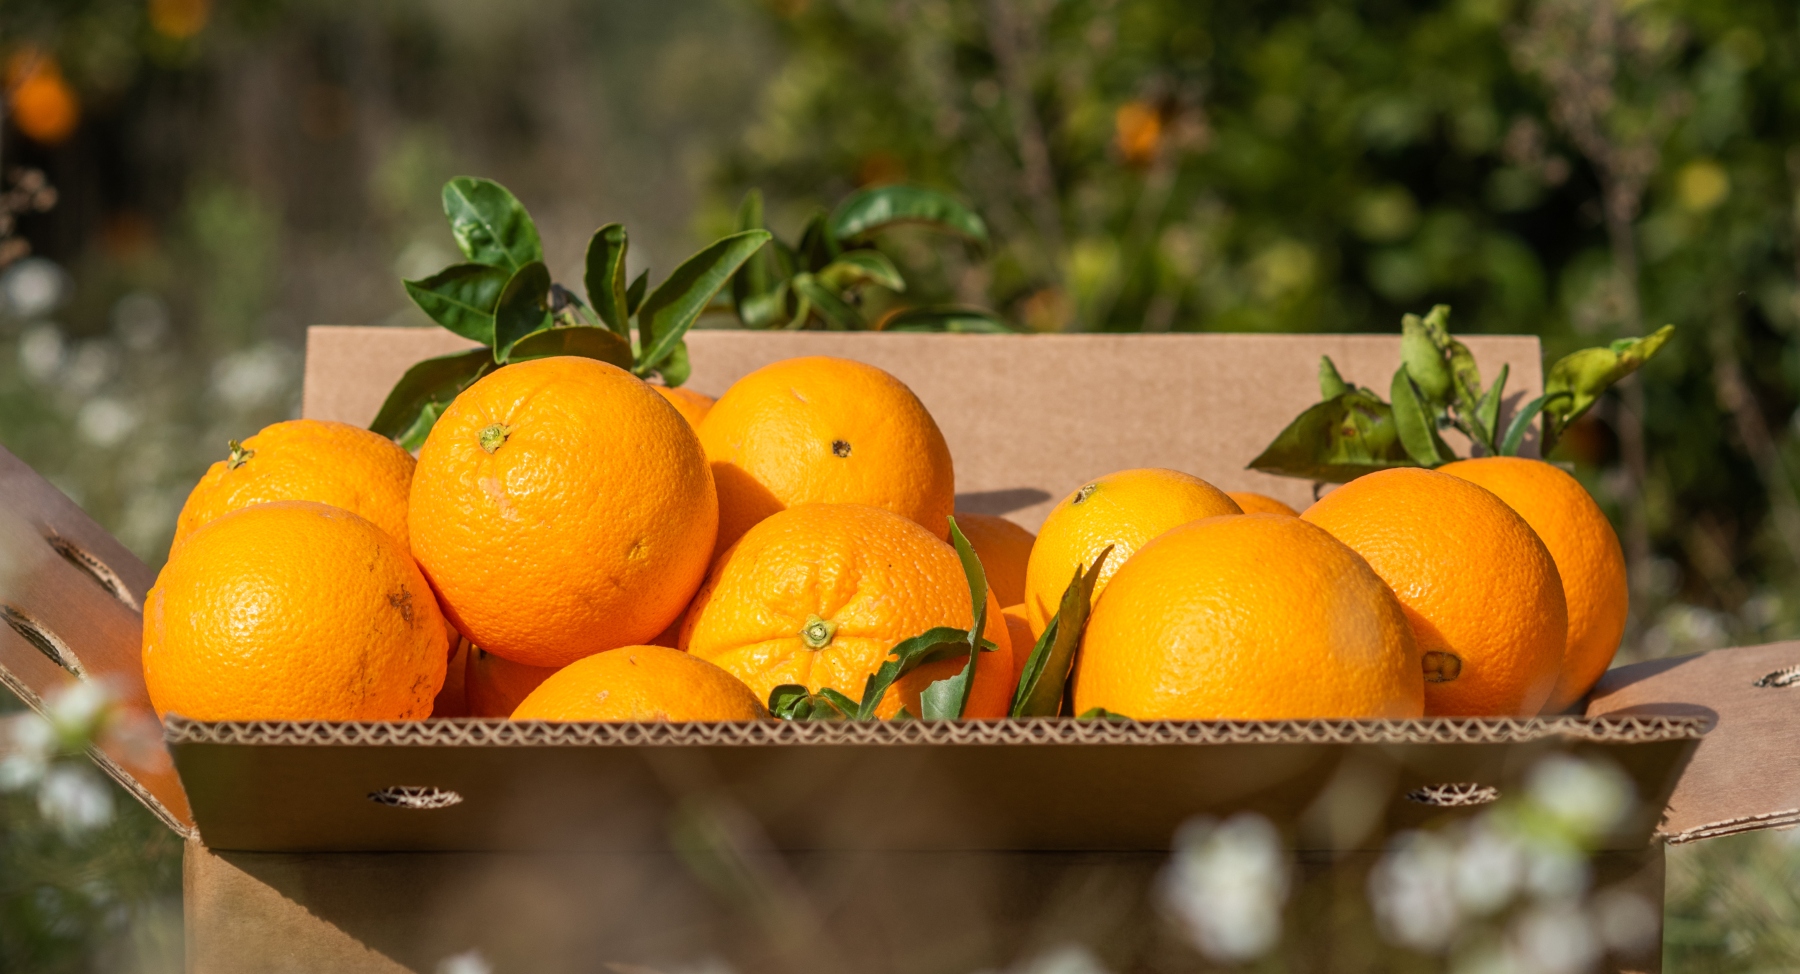 Organic oranges in a cardboard box